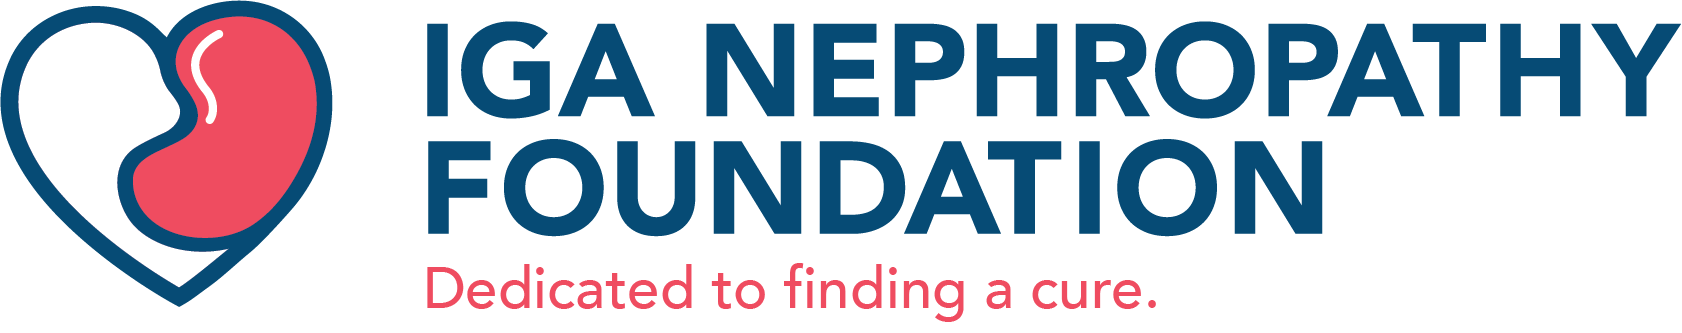 IGA Nephropathy Foundation of America, Inc. logo